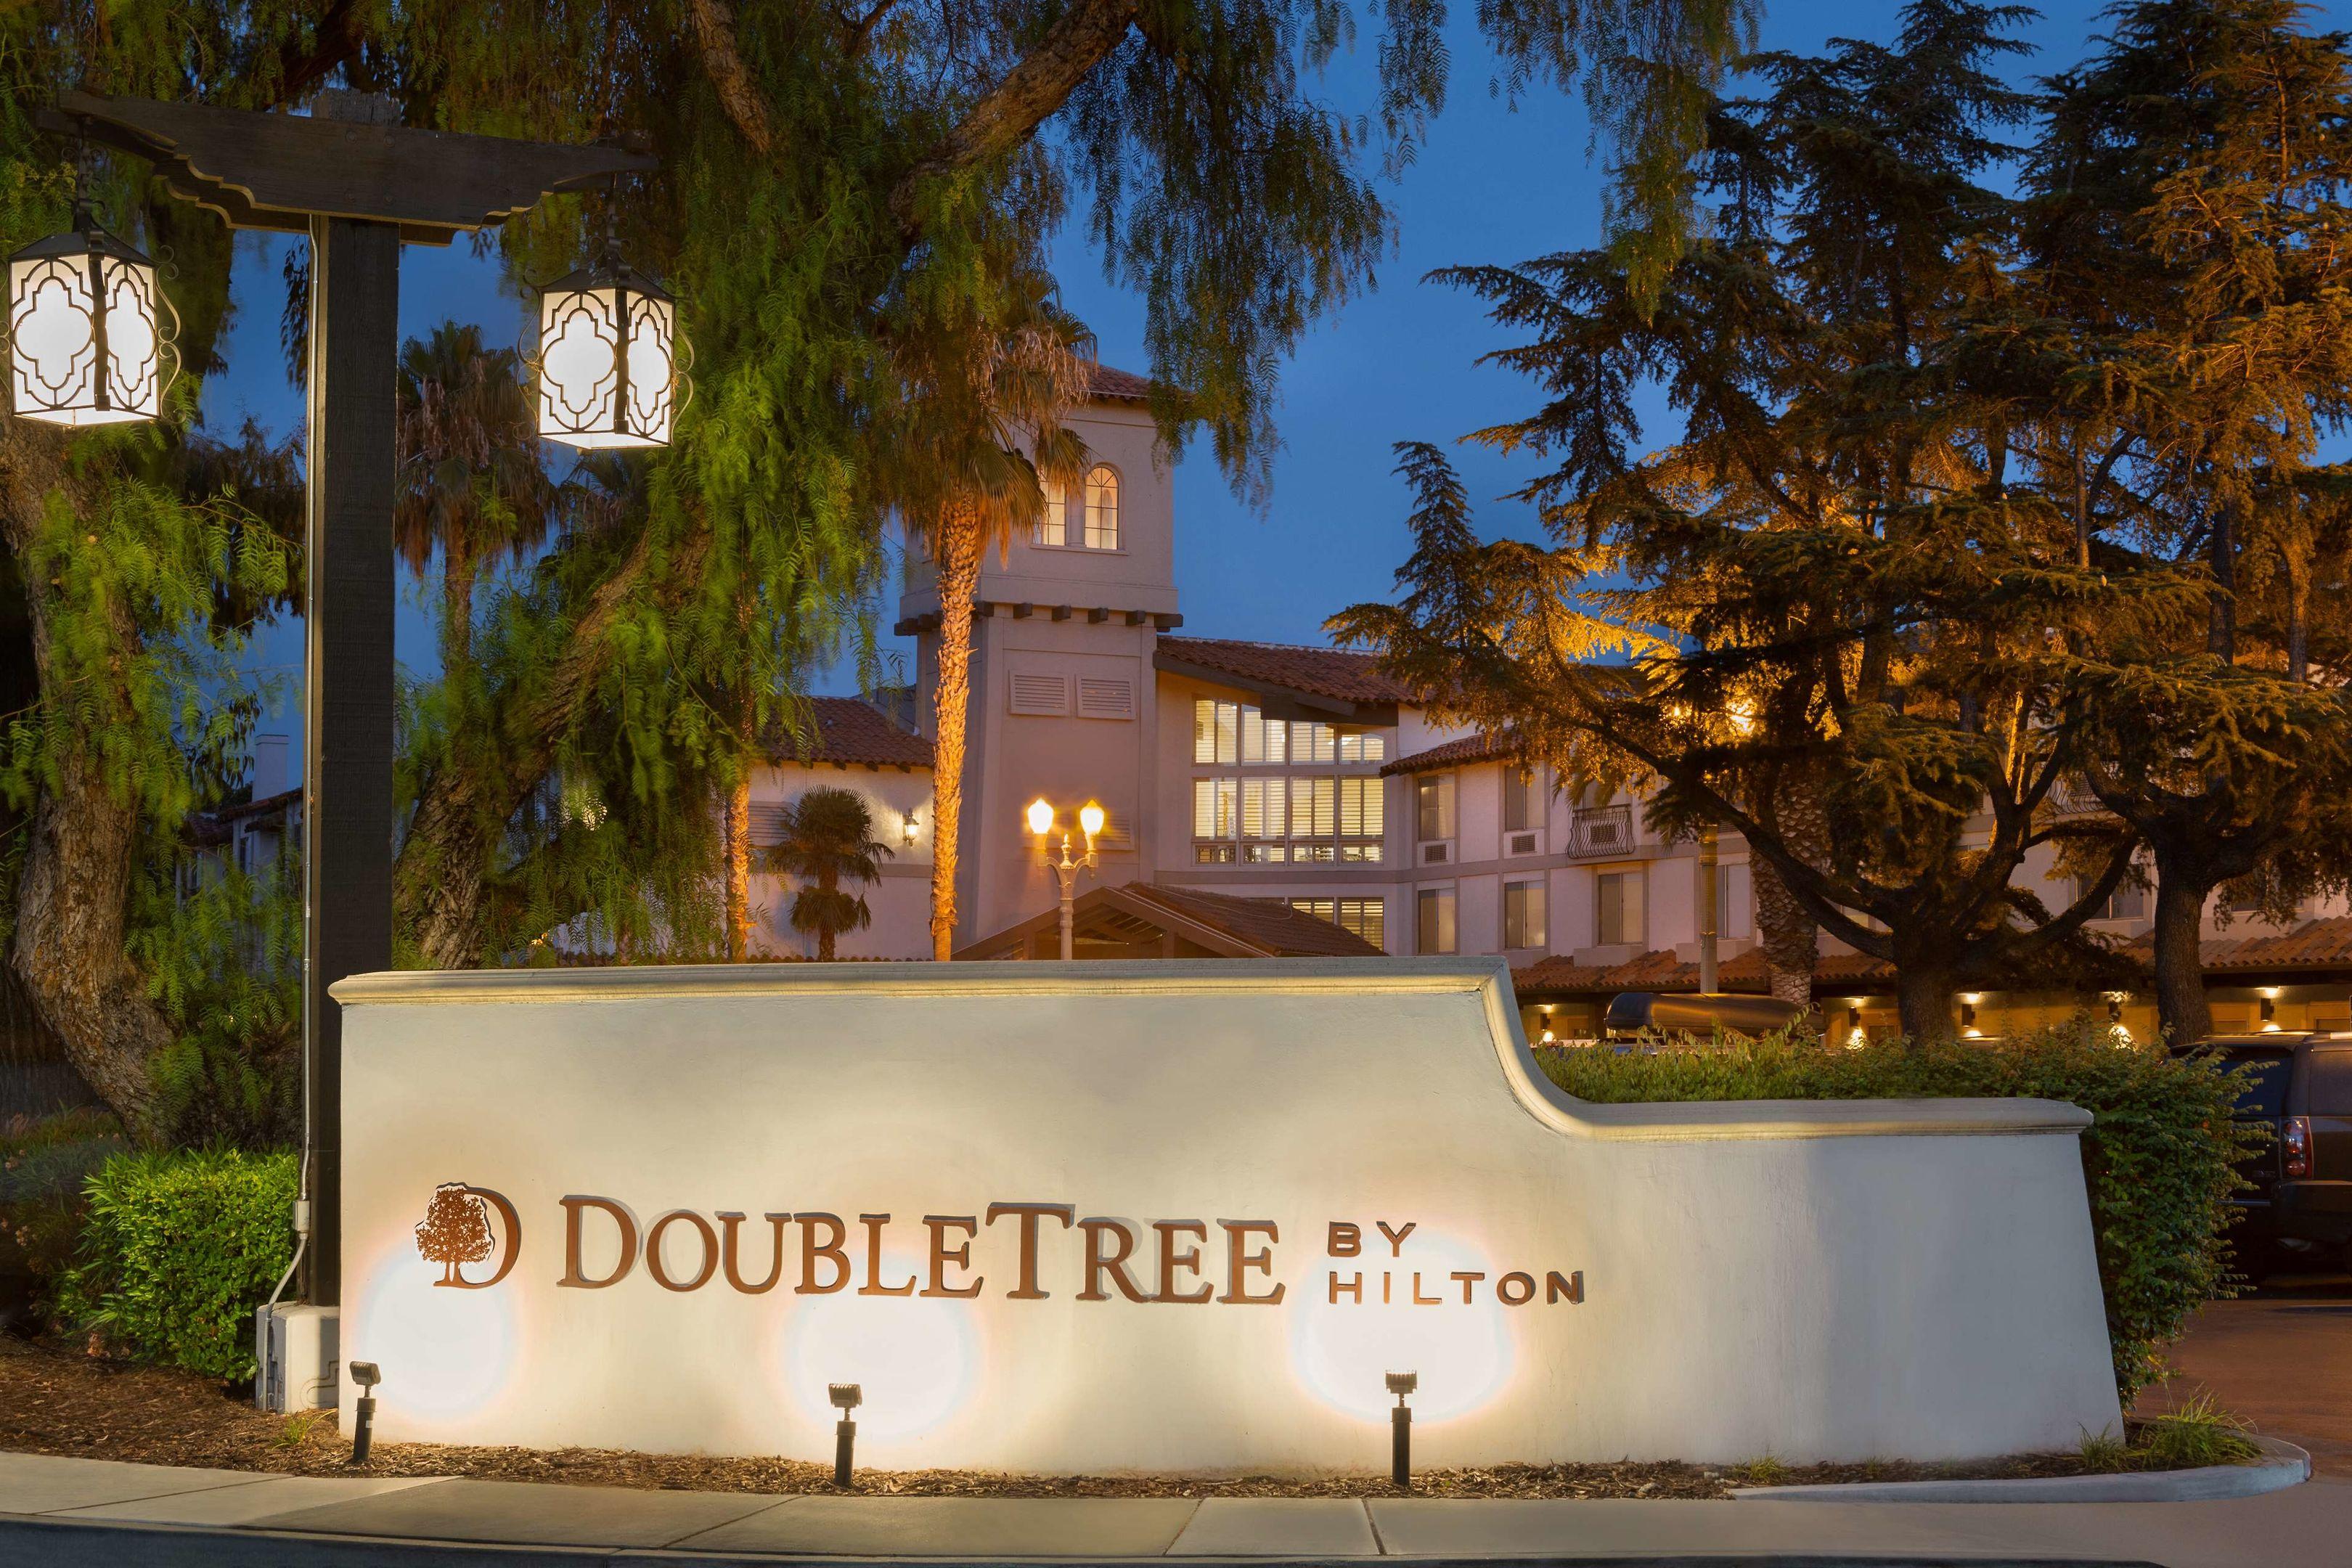 DoubleTree by Hilton Hotel Campbell - Pruneyard Plaza